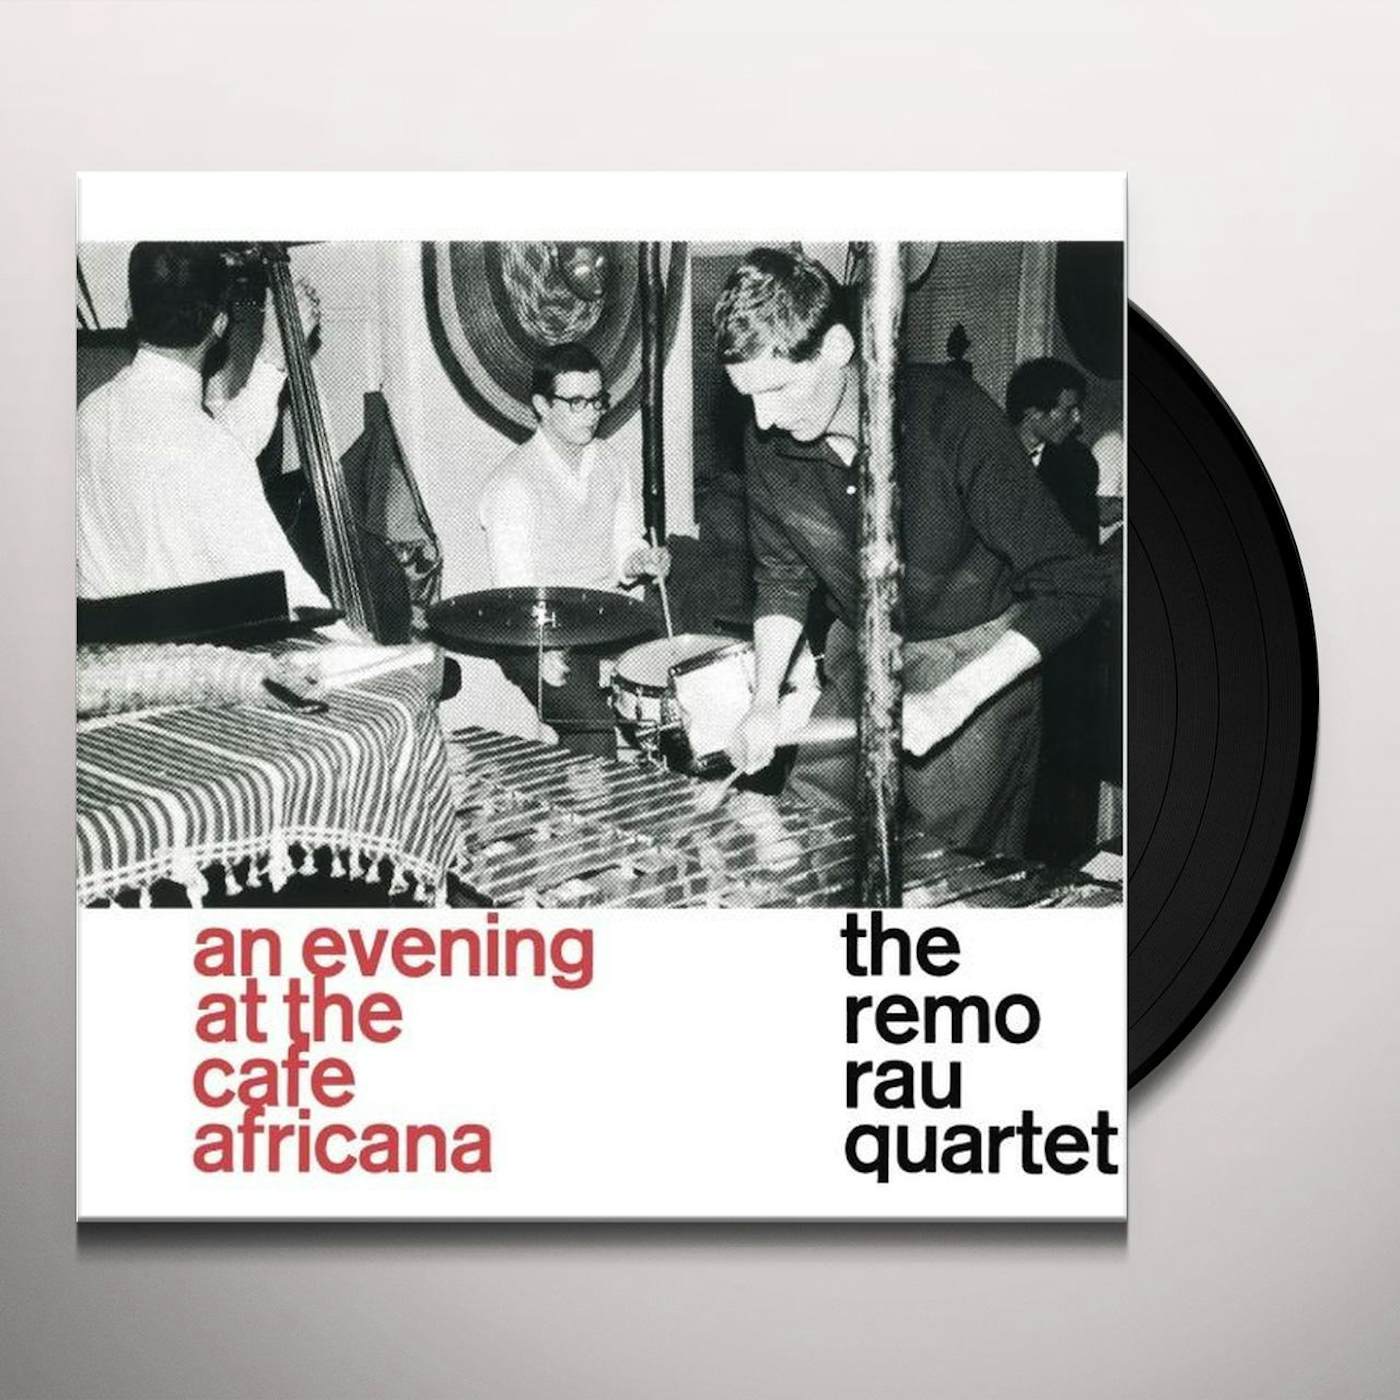 The Remo Rau Quartet At the Cafe Africana Vinyl Record